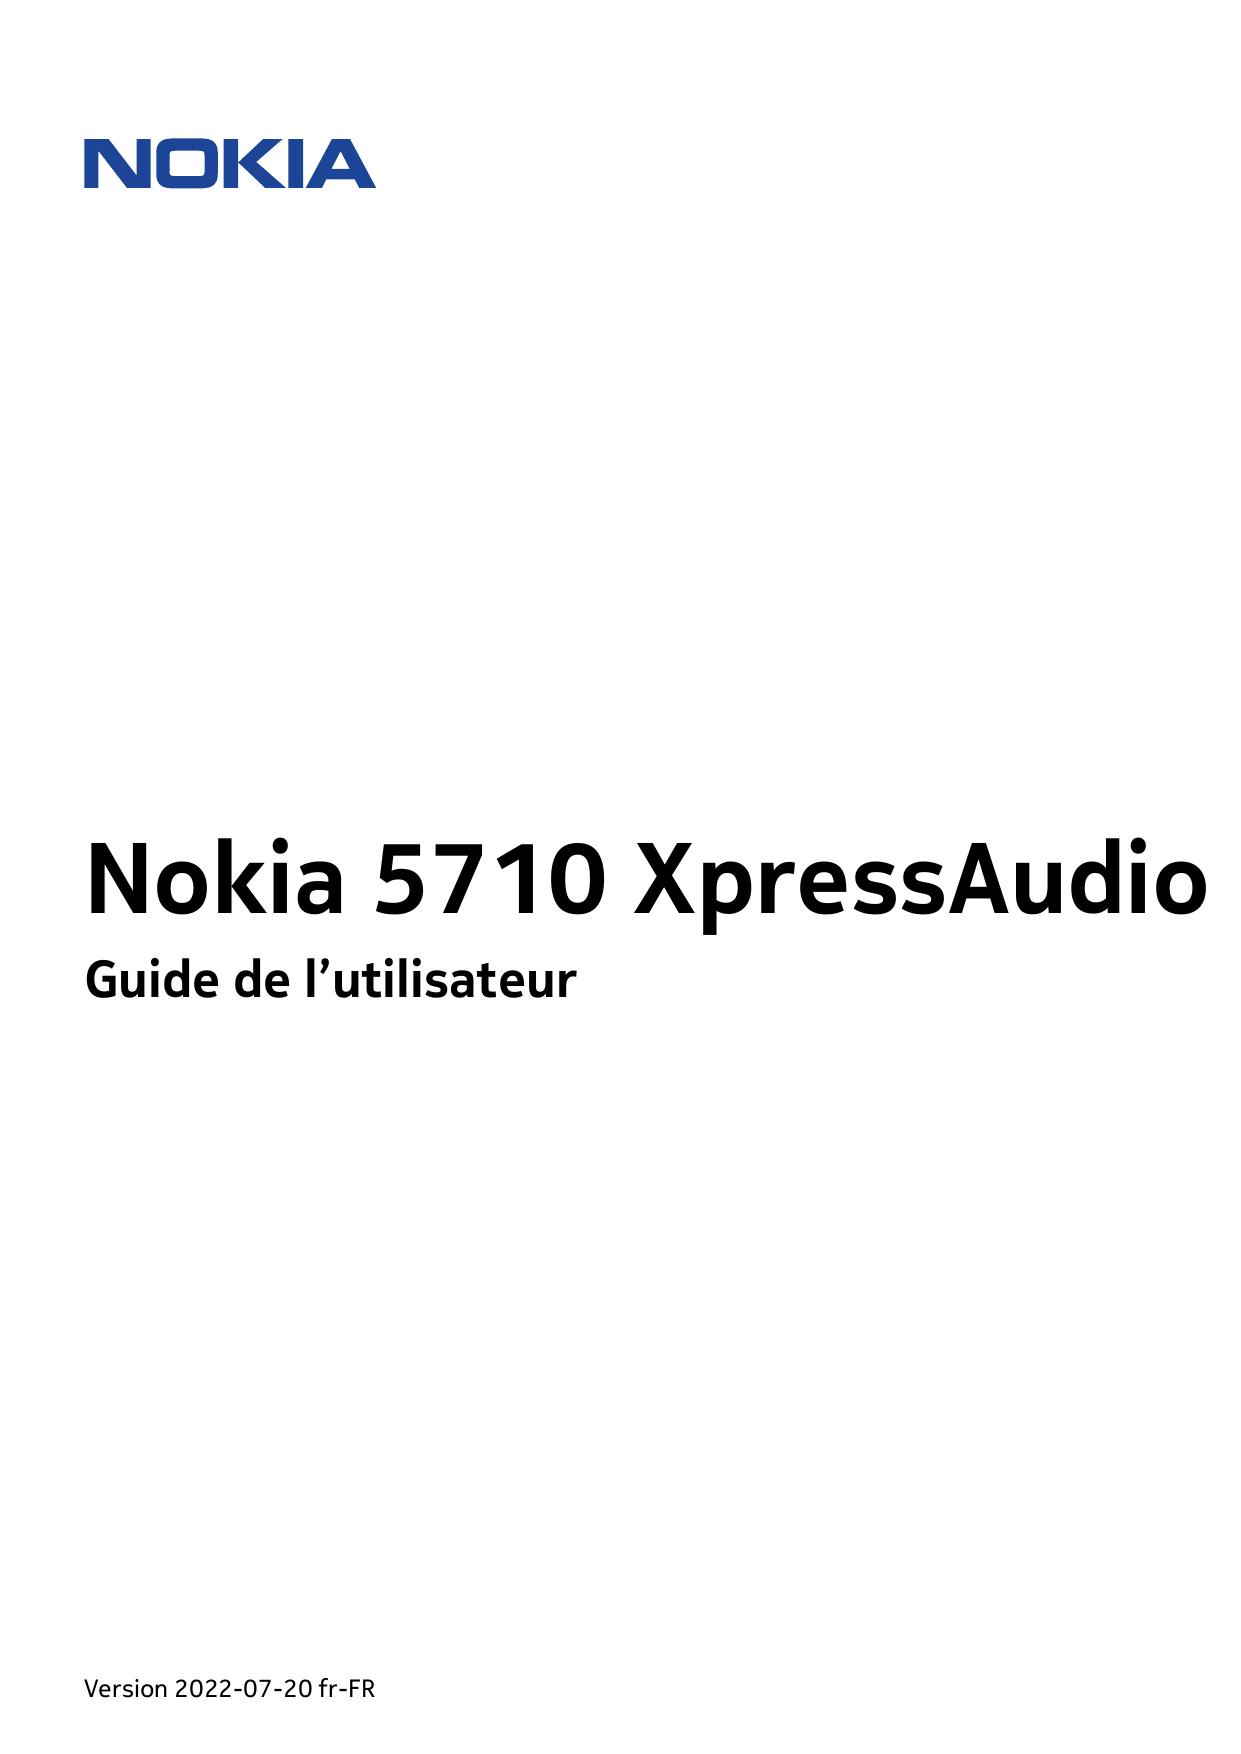 Nokia 5710 XpressAudioGuide de l’utilisateurVersion 2022-07-20 fr-FR